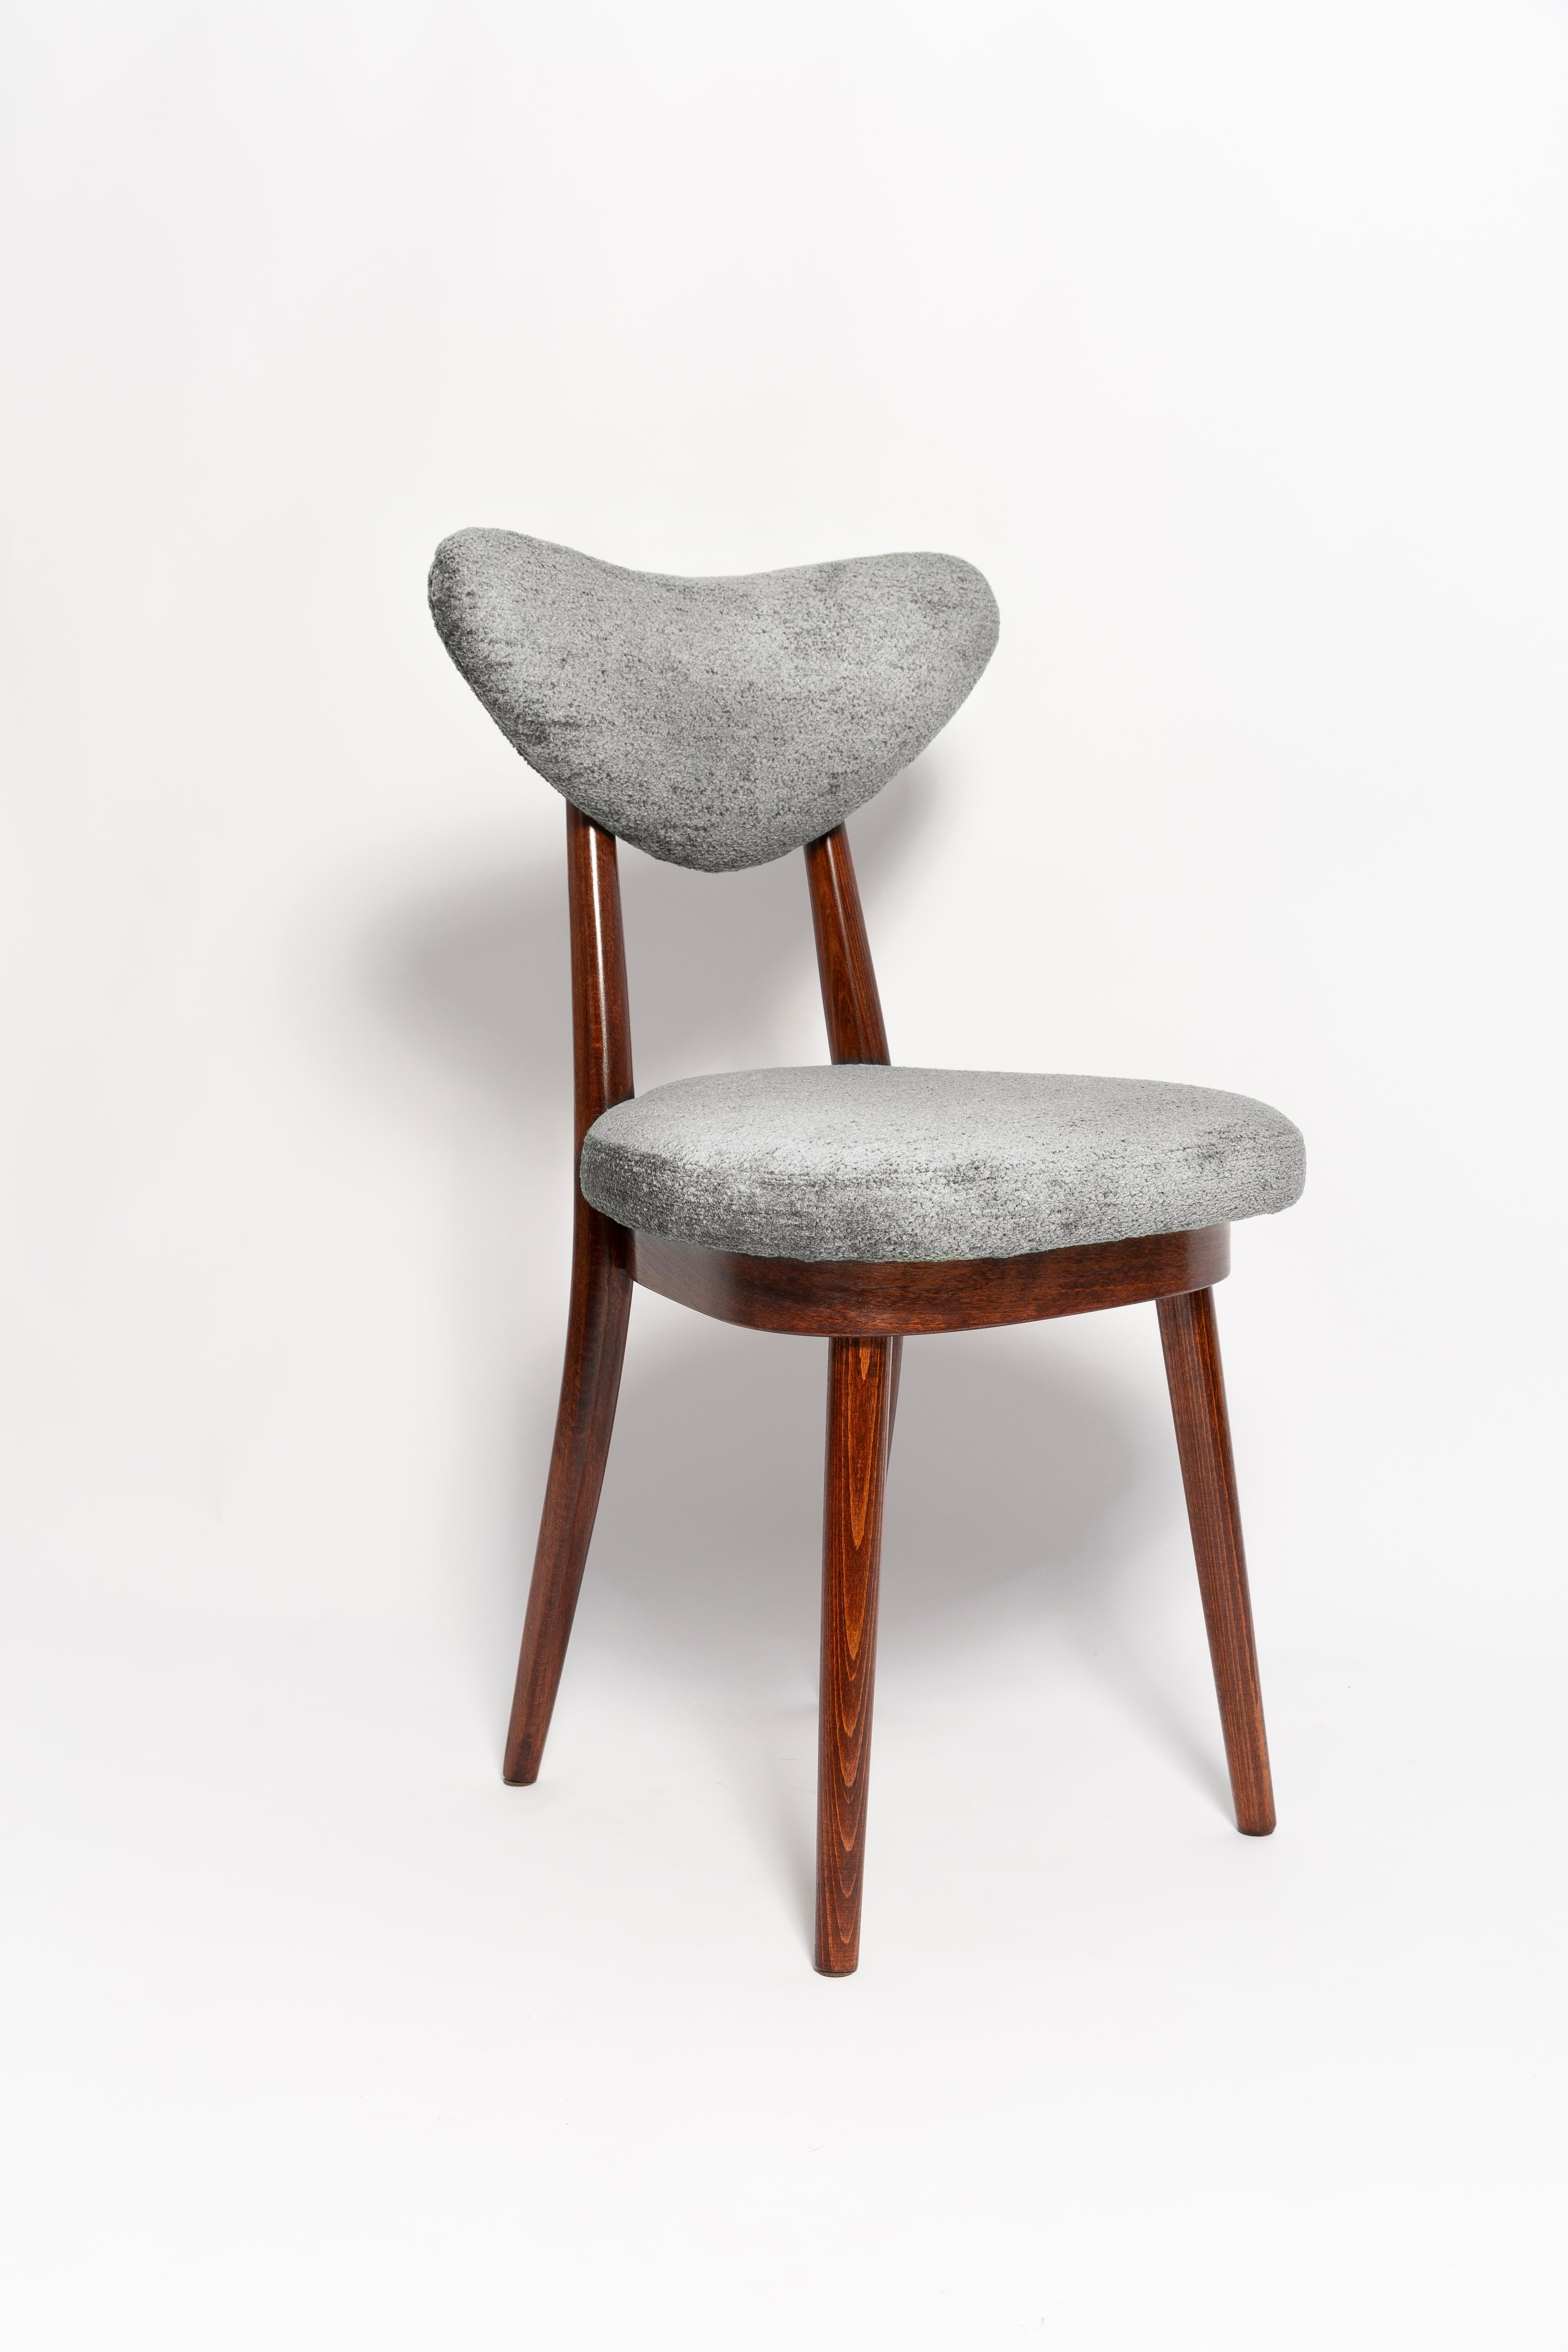 Polish Mid Century Heart Chair and Stool, Gray Velvet, Dark Wood, Europe 1960s For Sale